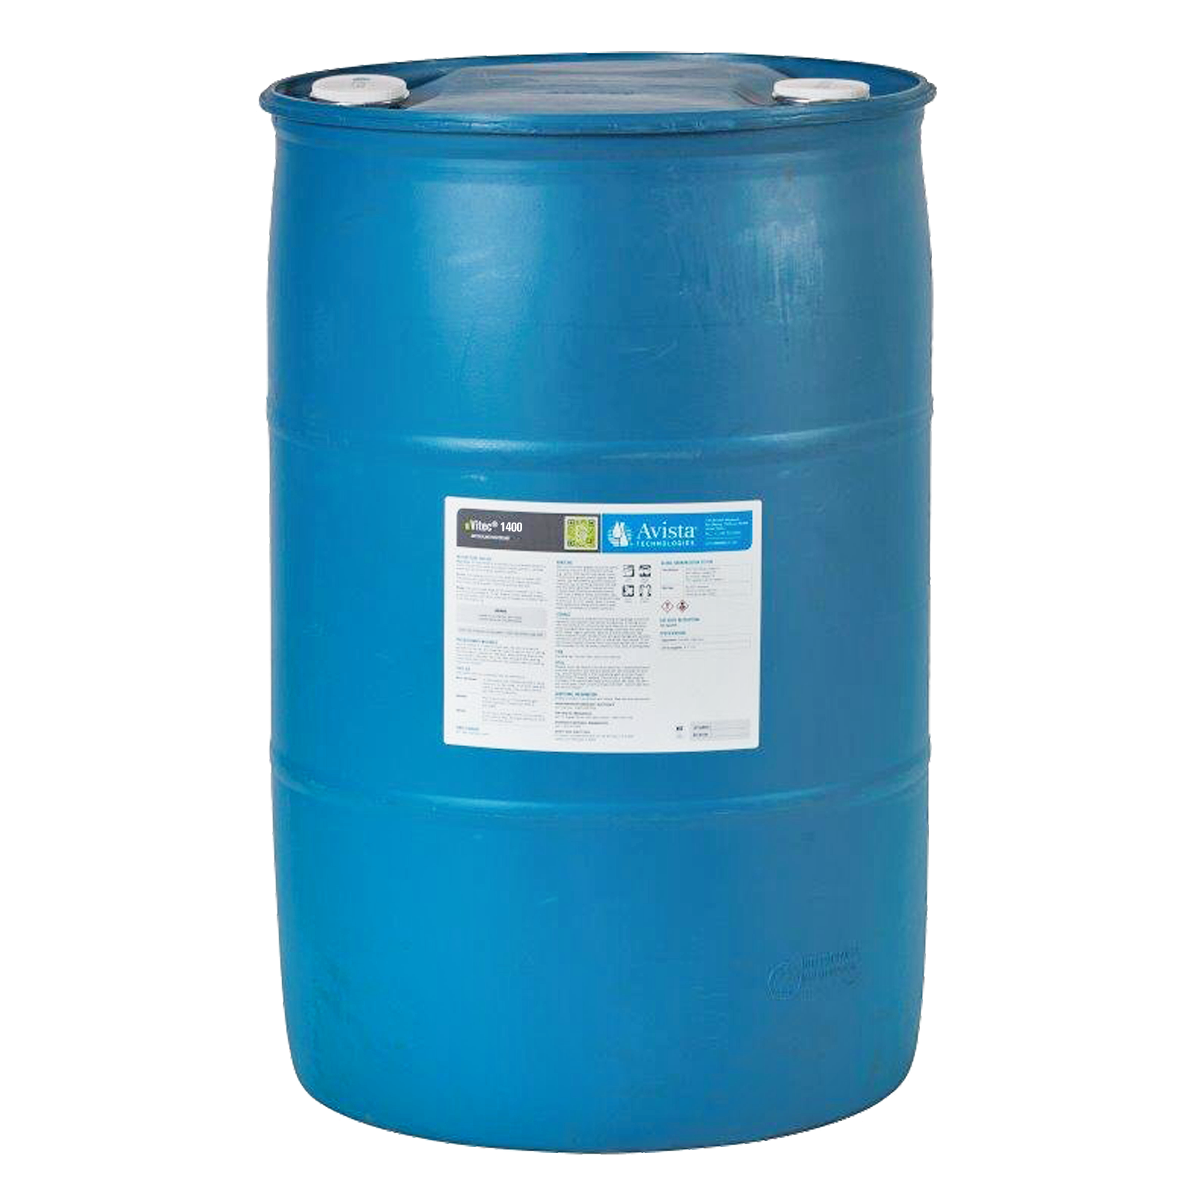 Anti-incrustante Dispersante - Vitec 1400 - 500 lbs (226.80 kg) - AVISTA